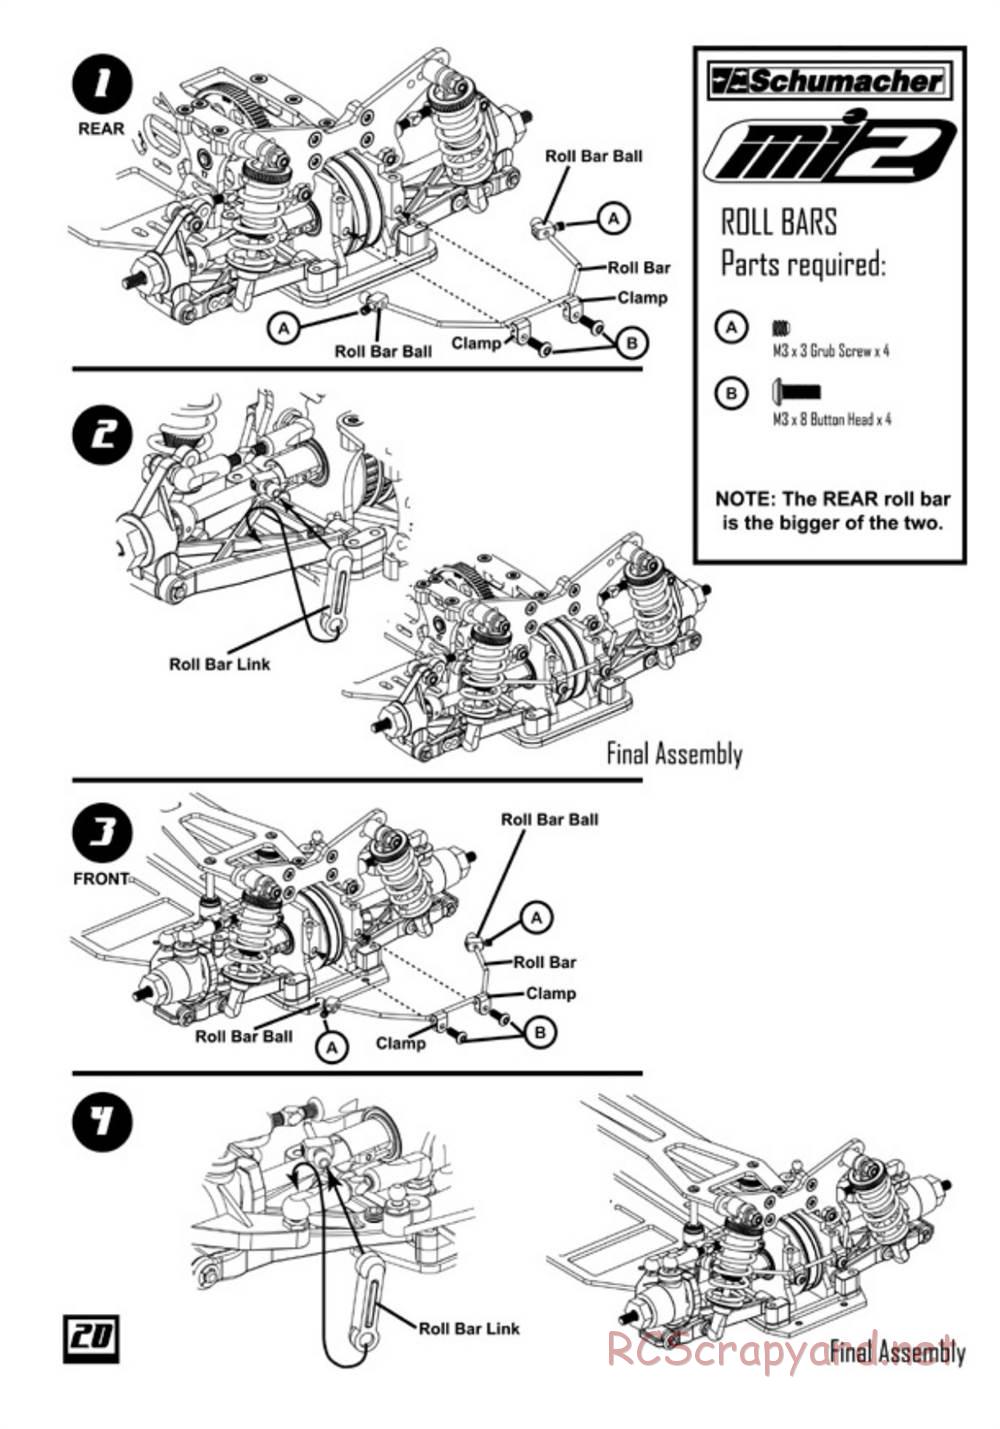 Schumacher - Mi2 - Manual - Page 22